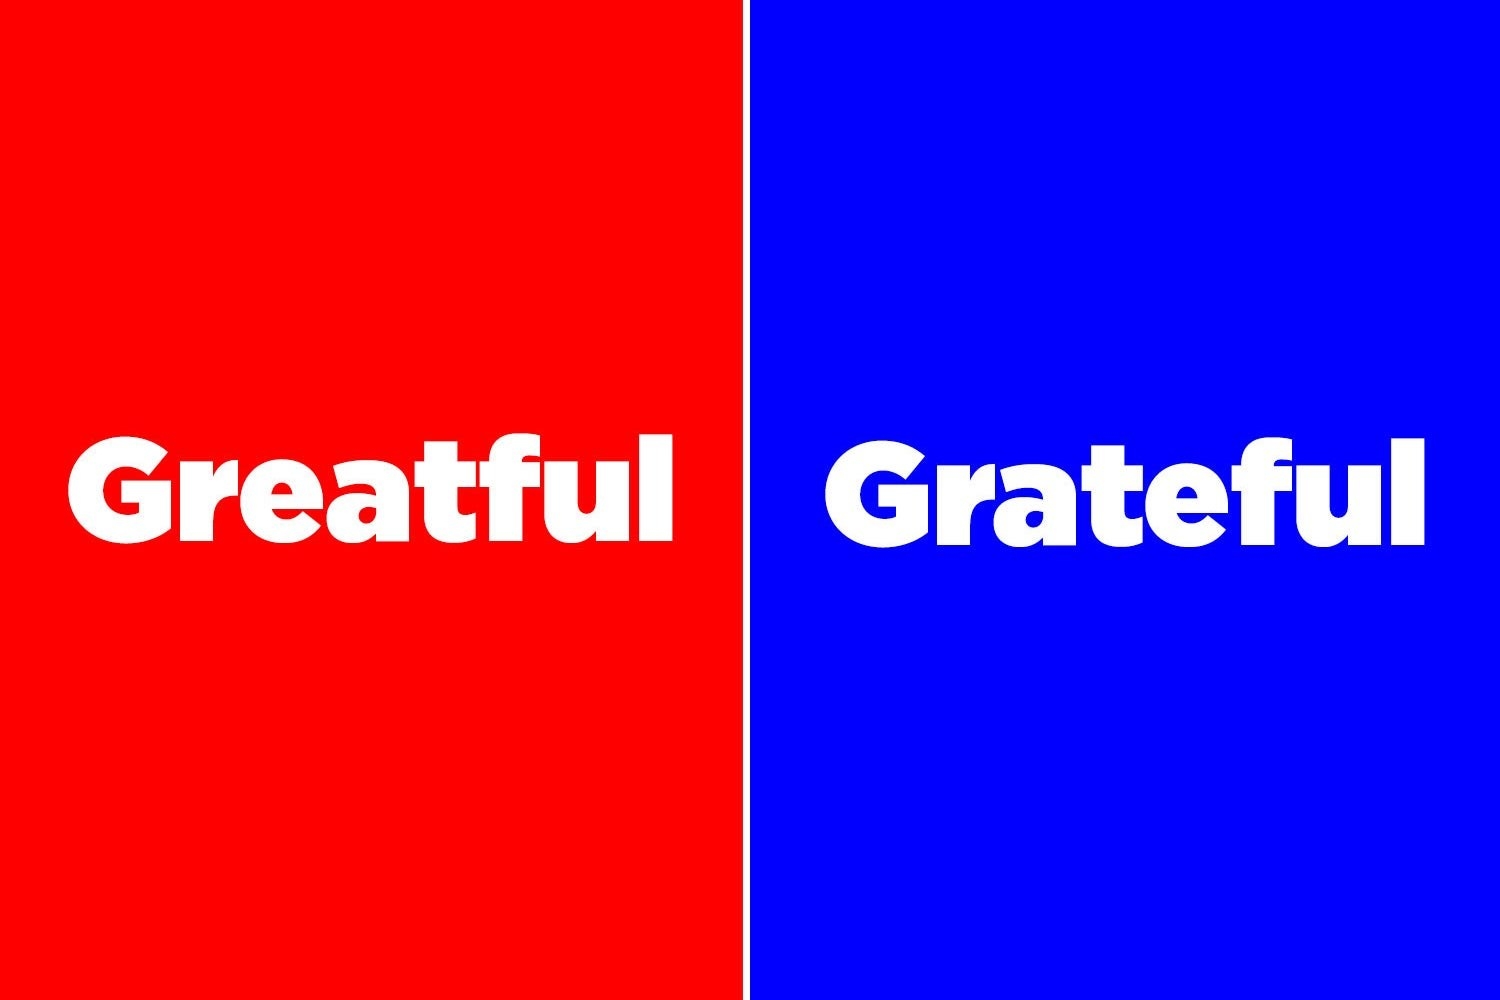 Greatful vs. Grateful 